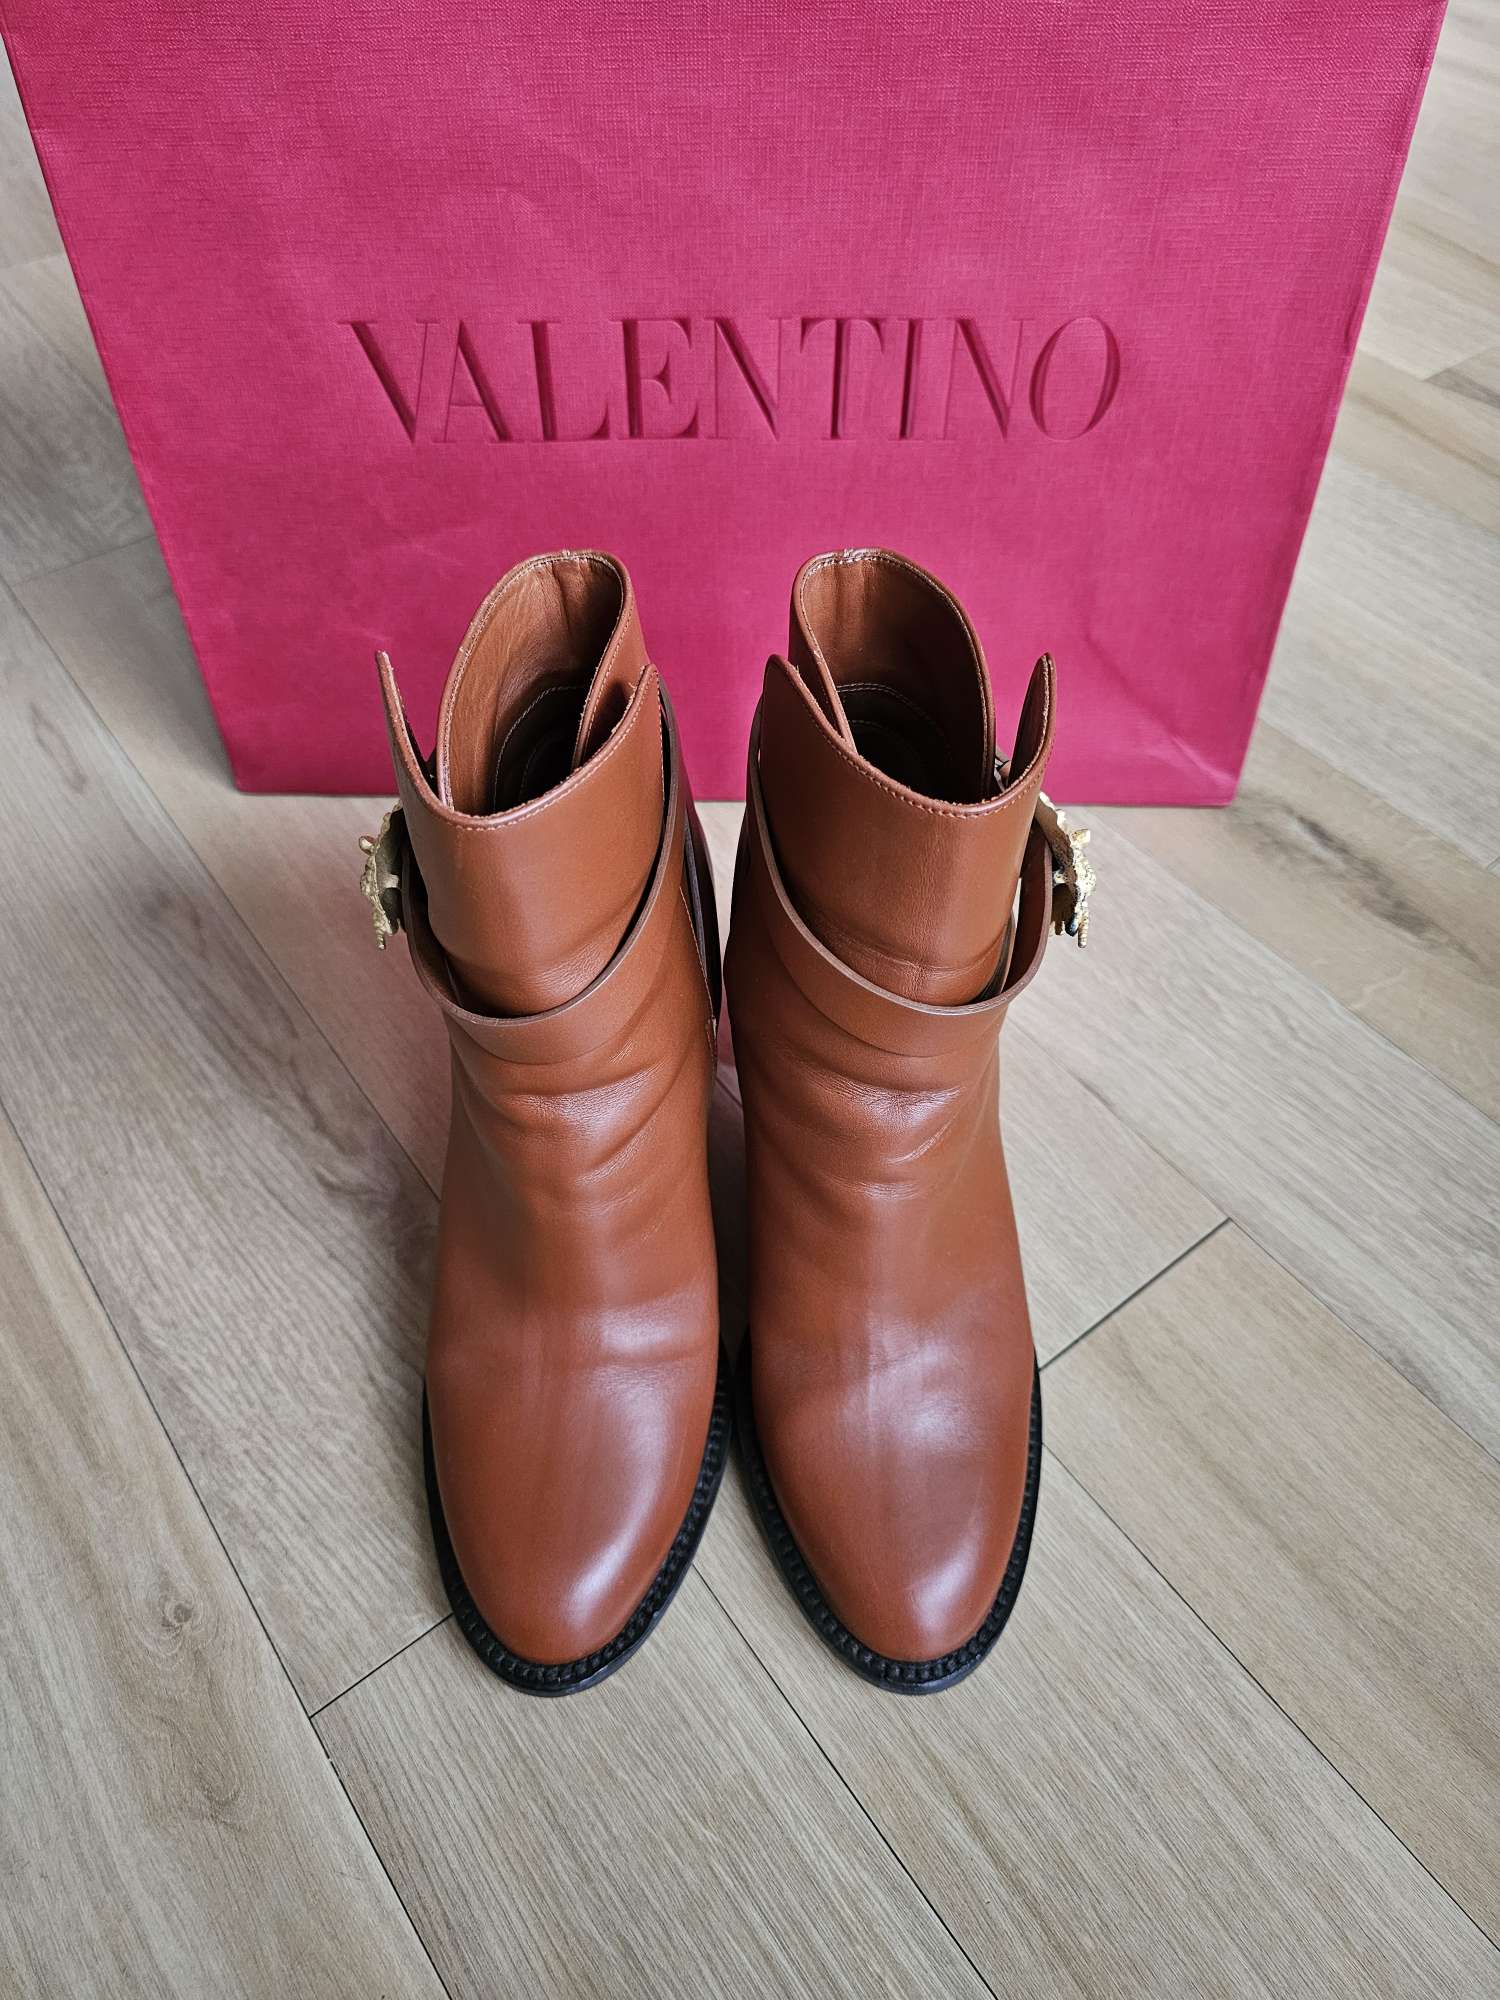 Valentino Garavani Cognac Leather Ankle Boots 38